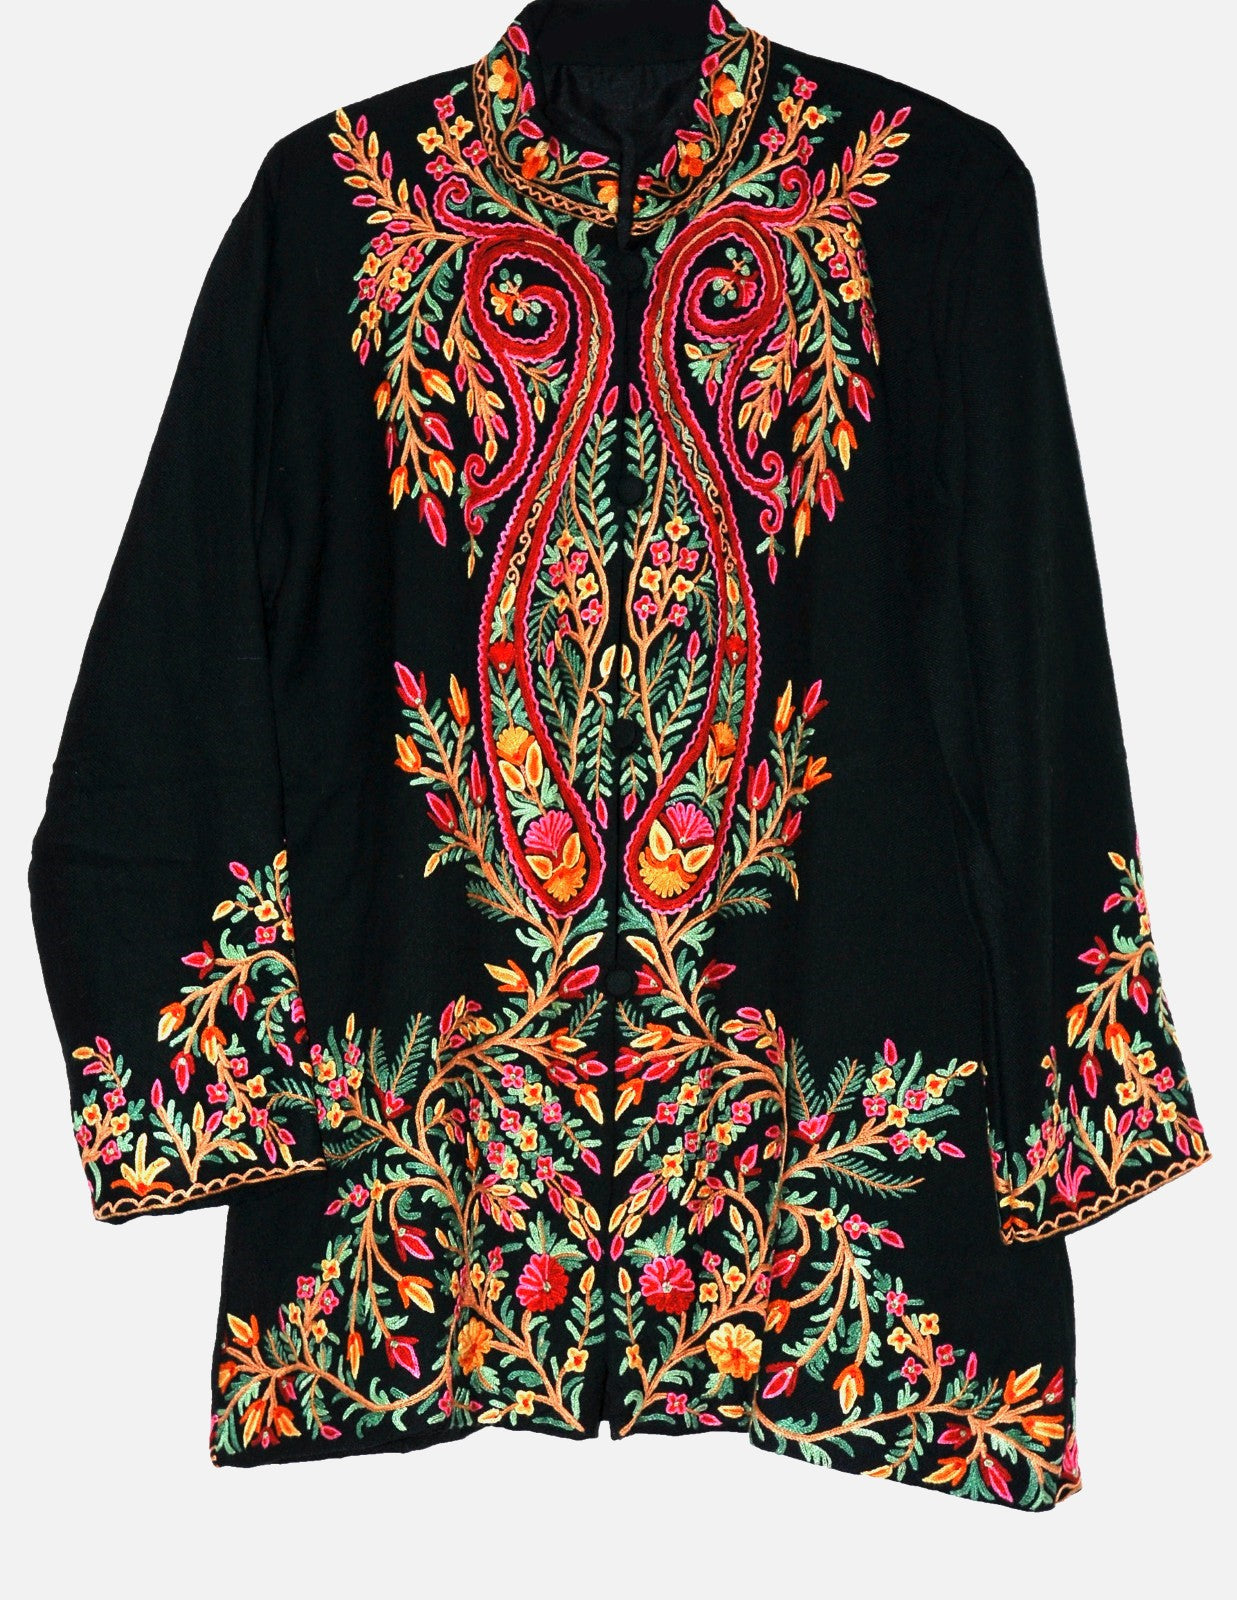 Kashmir Wool Partywear Coat, Short Jacket Black, Multicolor Embroidery #AO-003